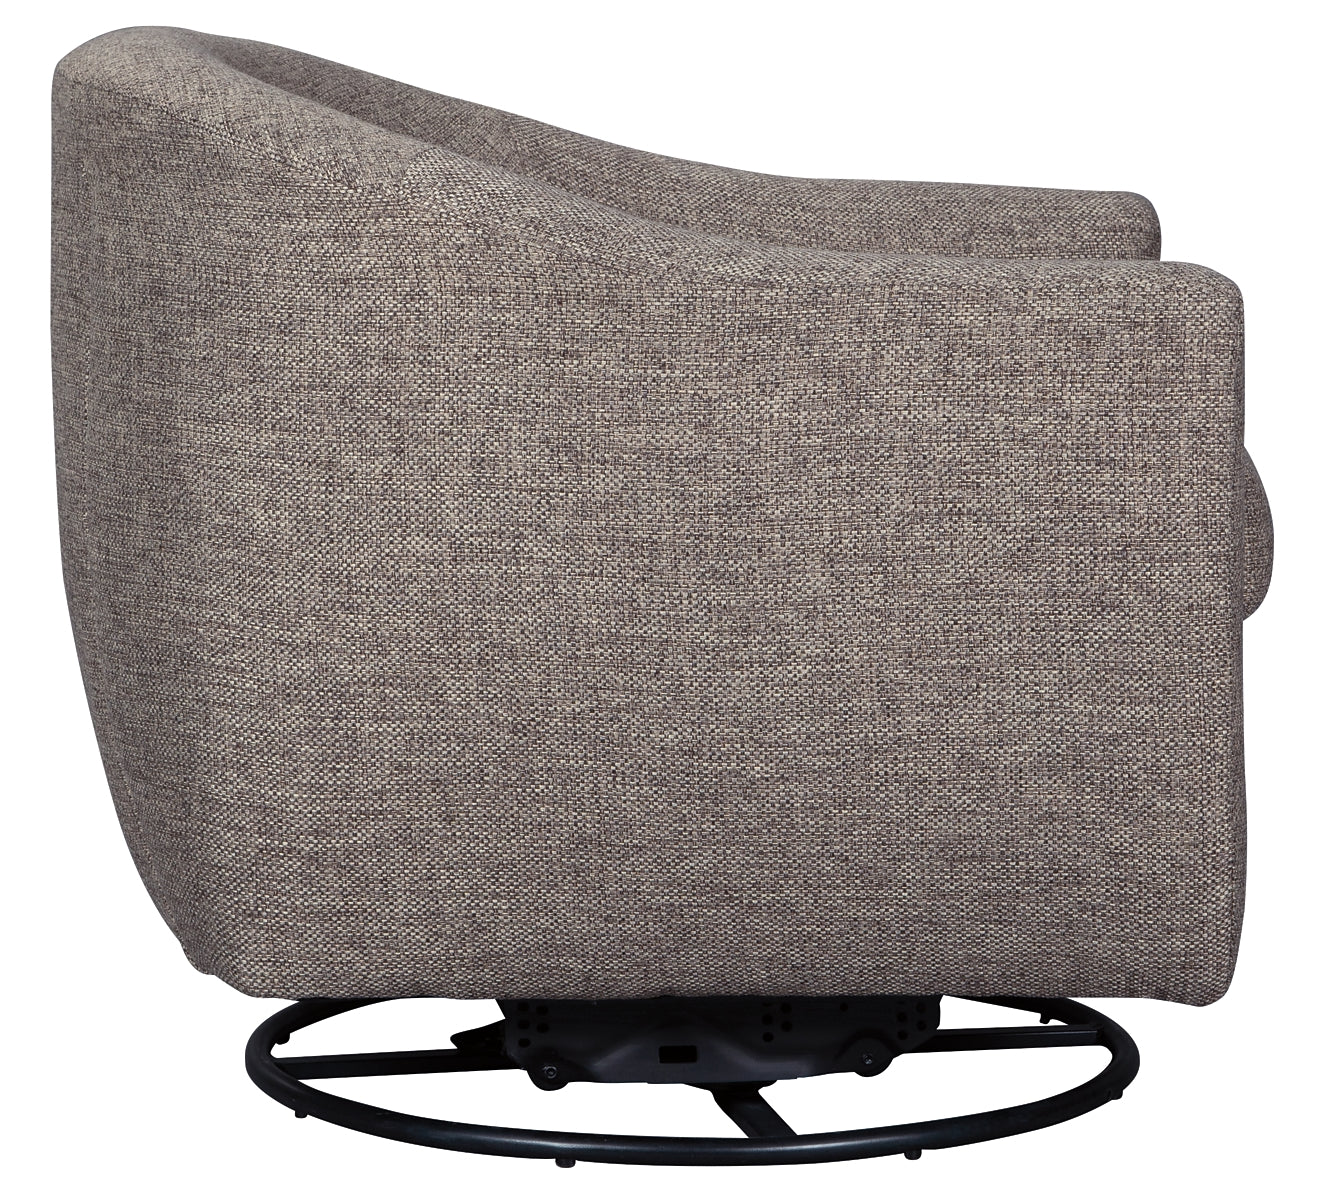 Upshur Swivel Glider Accent Chair at Towne & Country Furniture (AL) furniture, home furniture, home decor, sofa, bedding